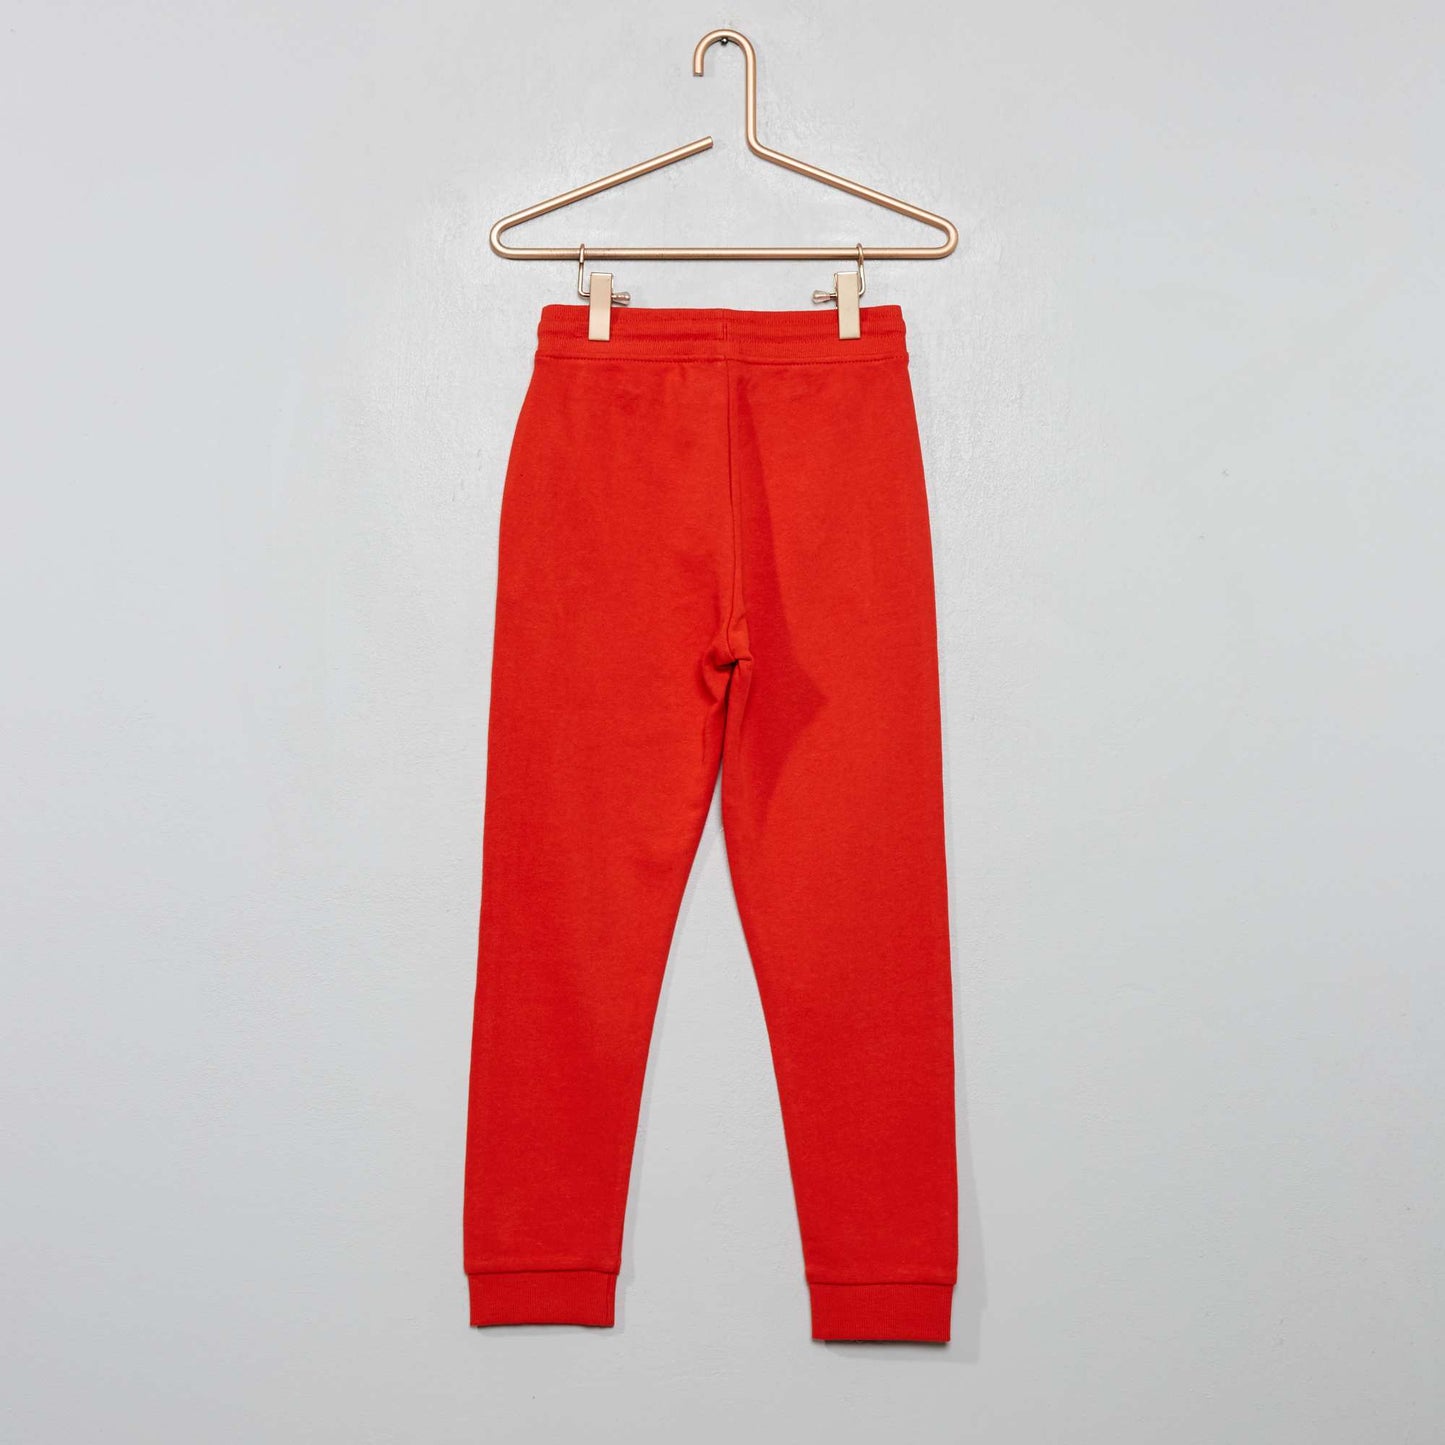 Plain sweatshirt fabric trousers red